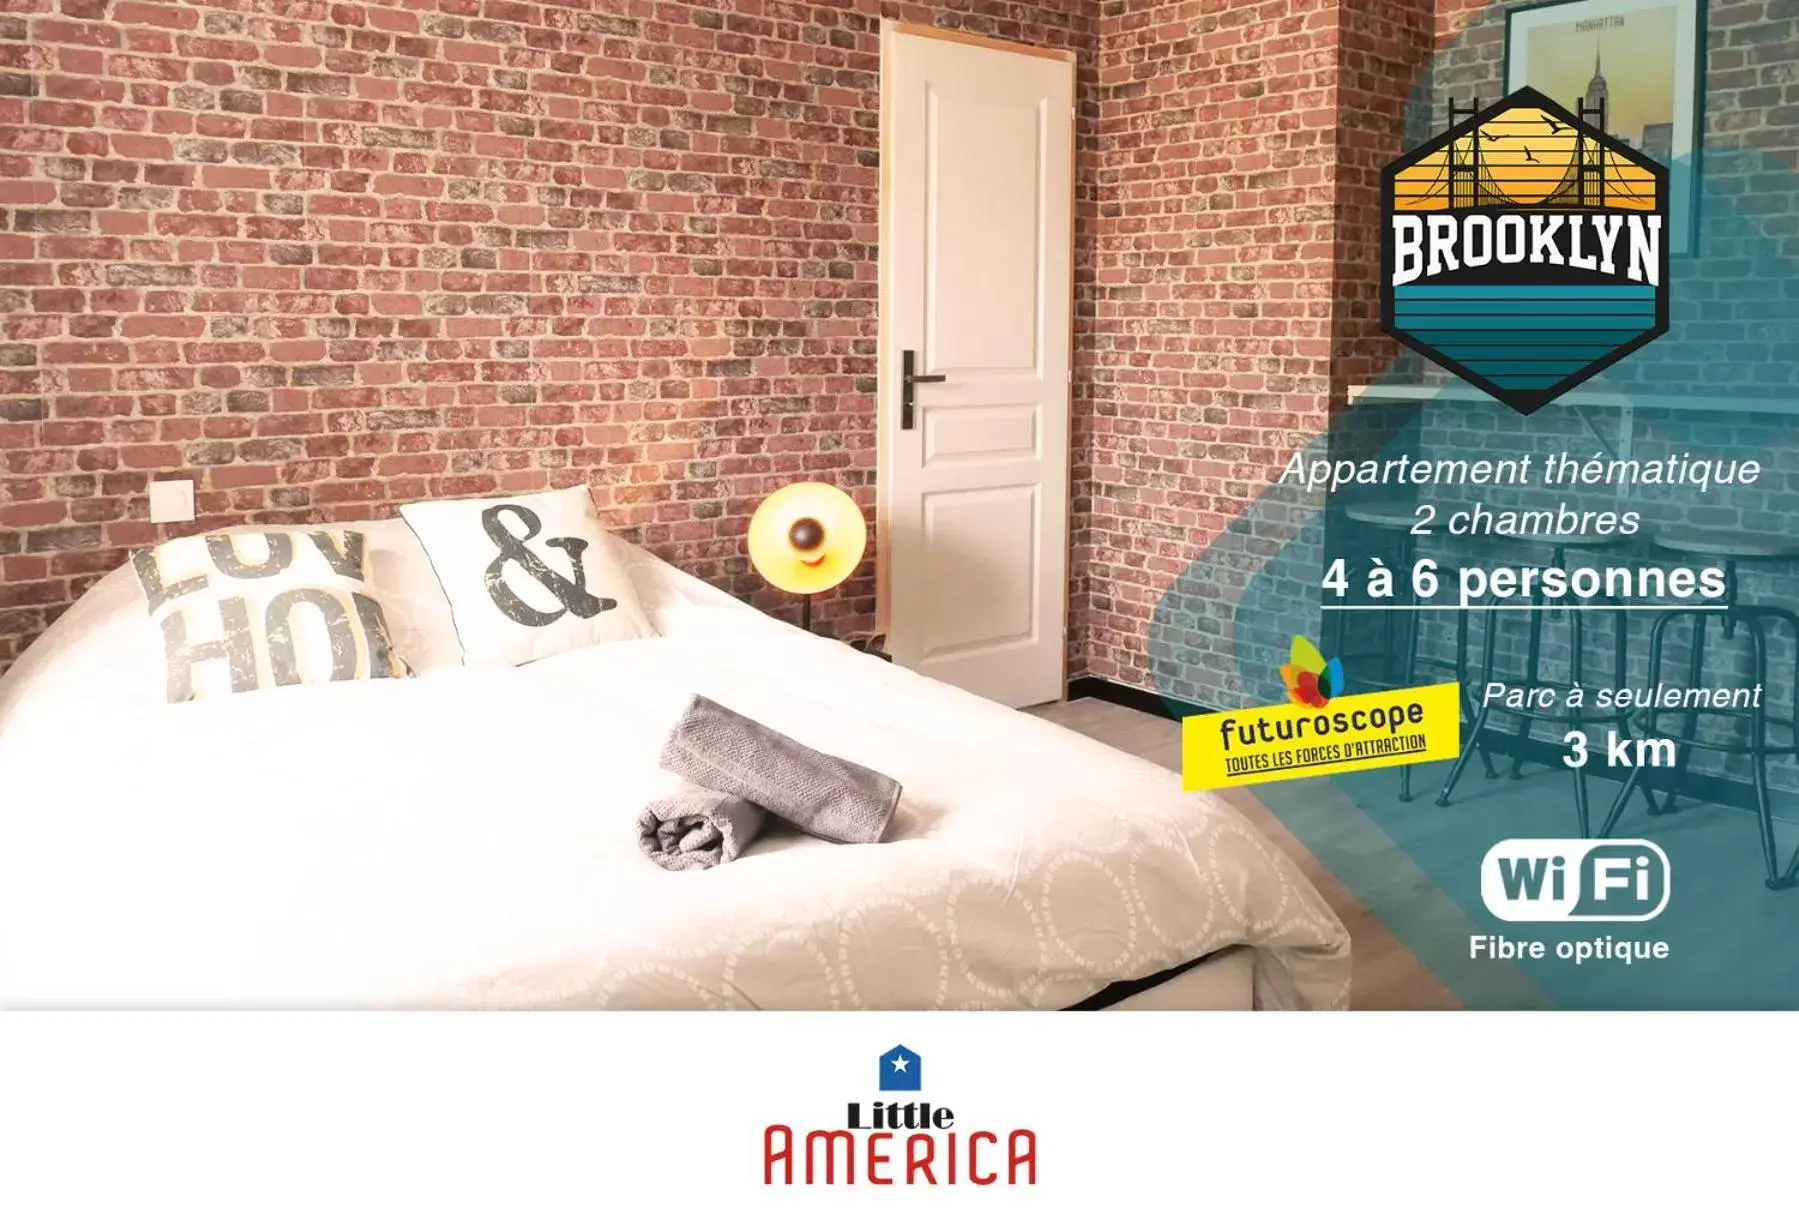 Logo/Certificate/Sign, Bed in Little America - Appart Hôtel 3km Futuroscope